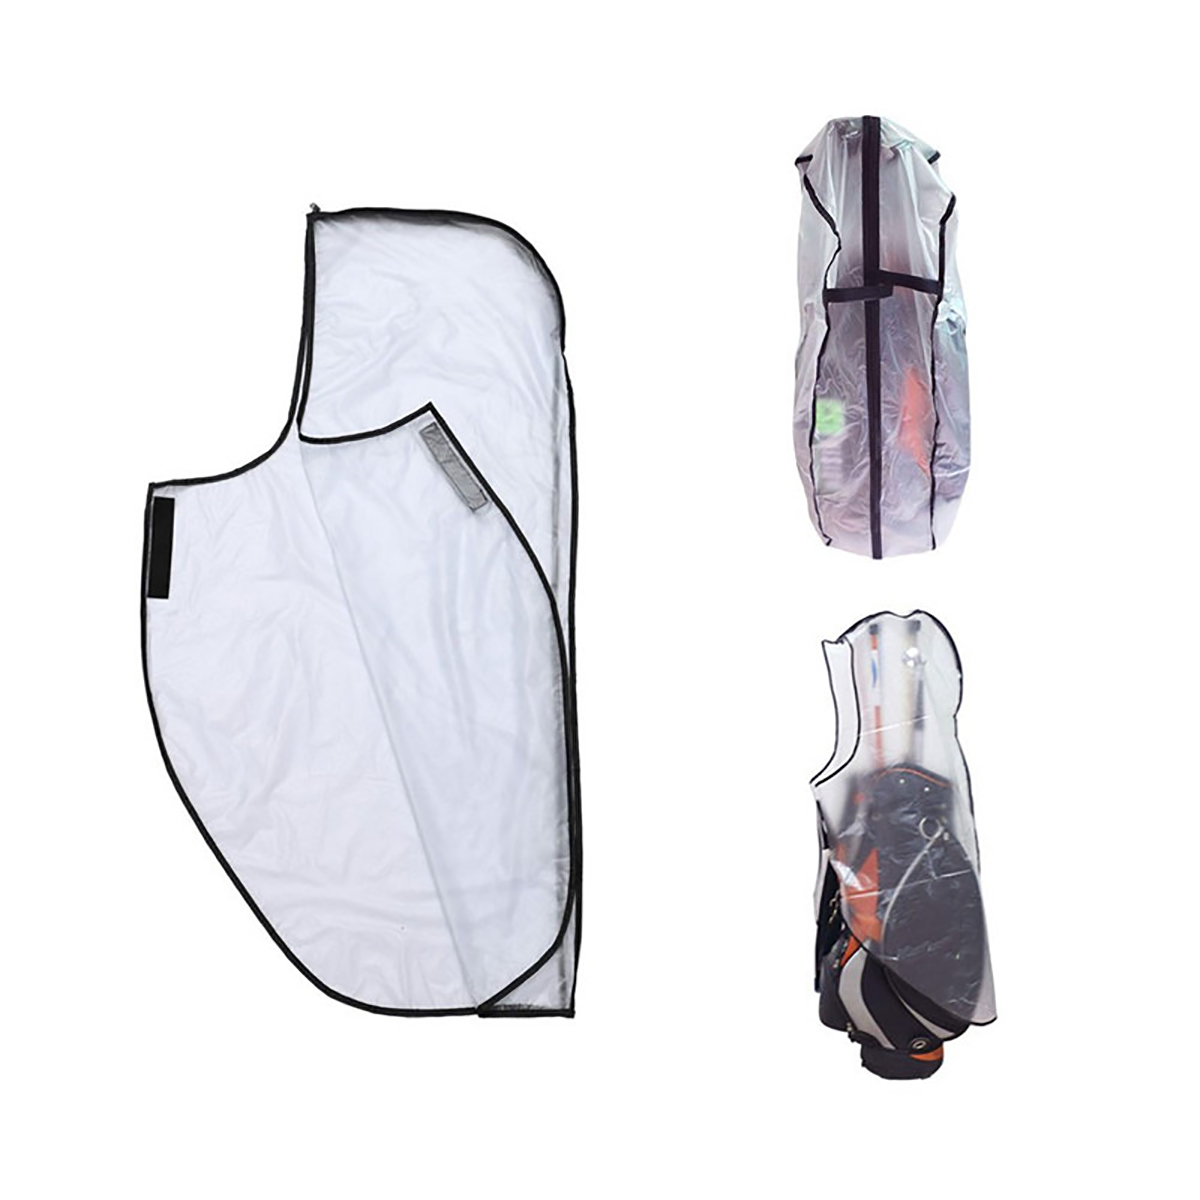 Transparent-Golf-Rain-Cover-Raincoat-Waterproof-Dustproof-Golf-Club-Bag-Protector-1549850-3